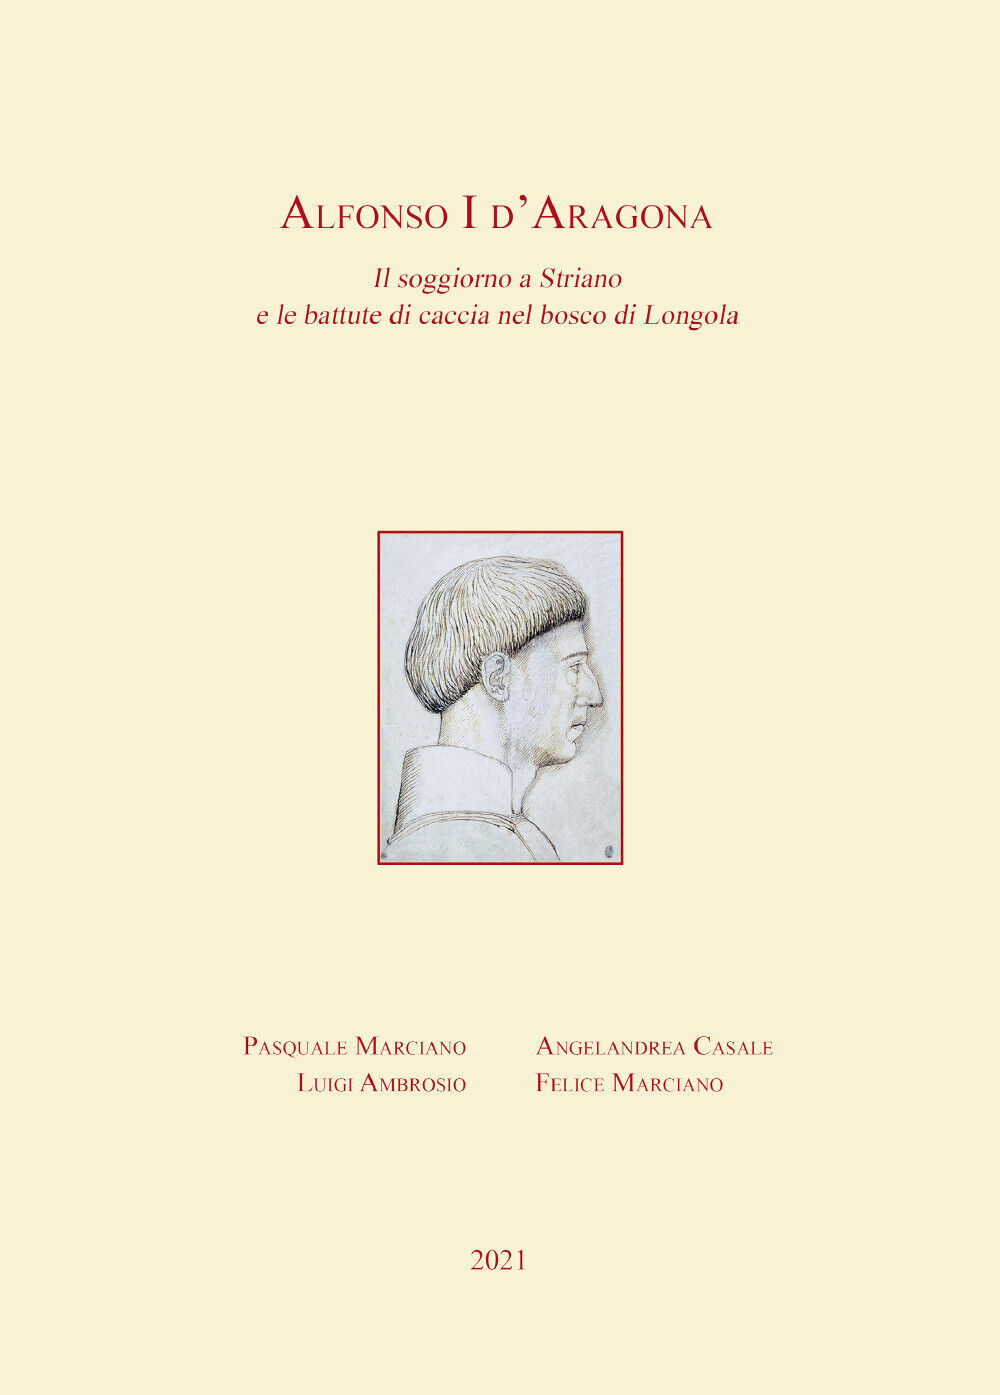 Alfonso I d'Aragonadi Pasquale Marciano, Angelandrea Casale, Felice Marciano, Lu libro usato